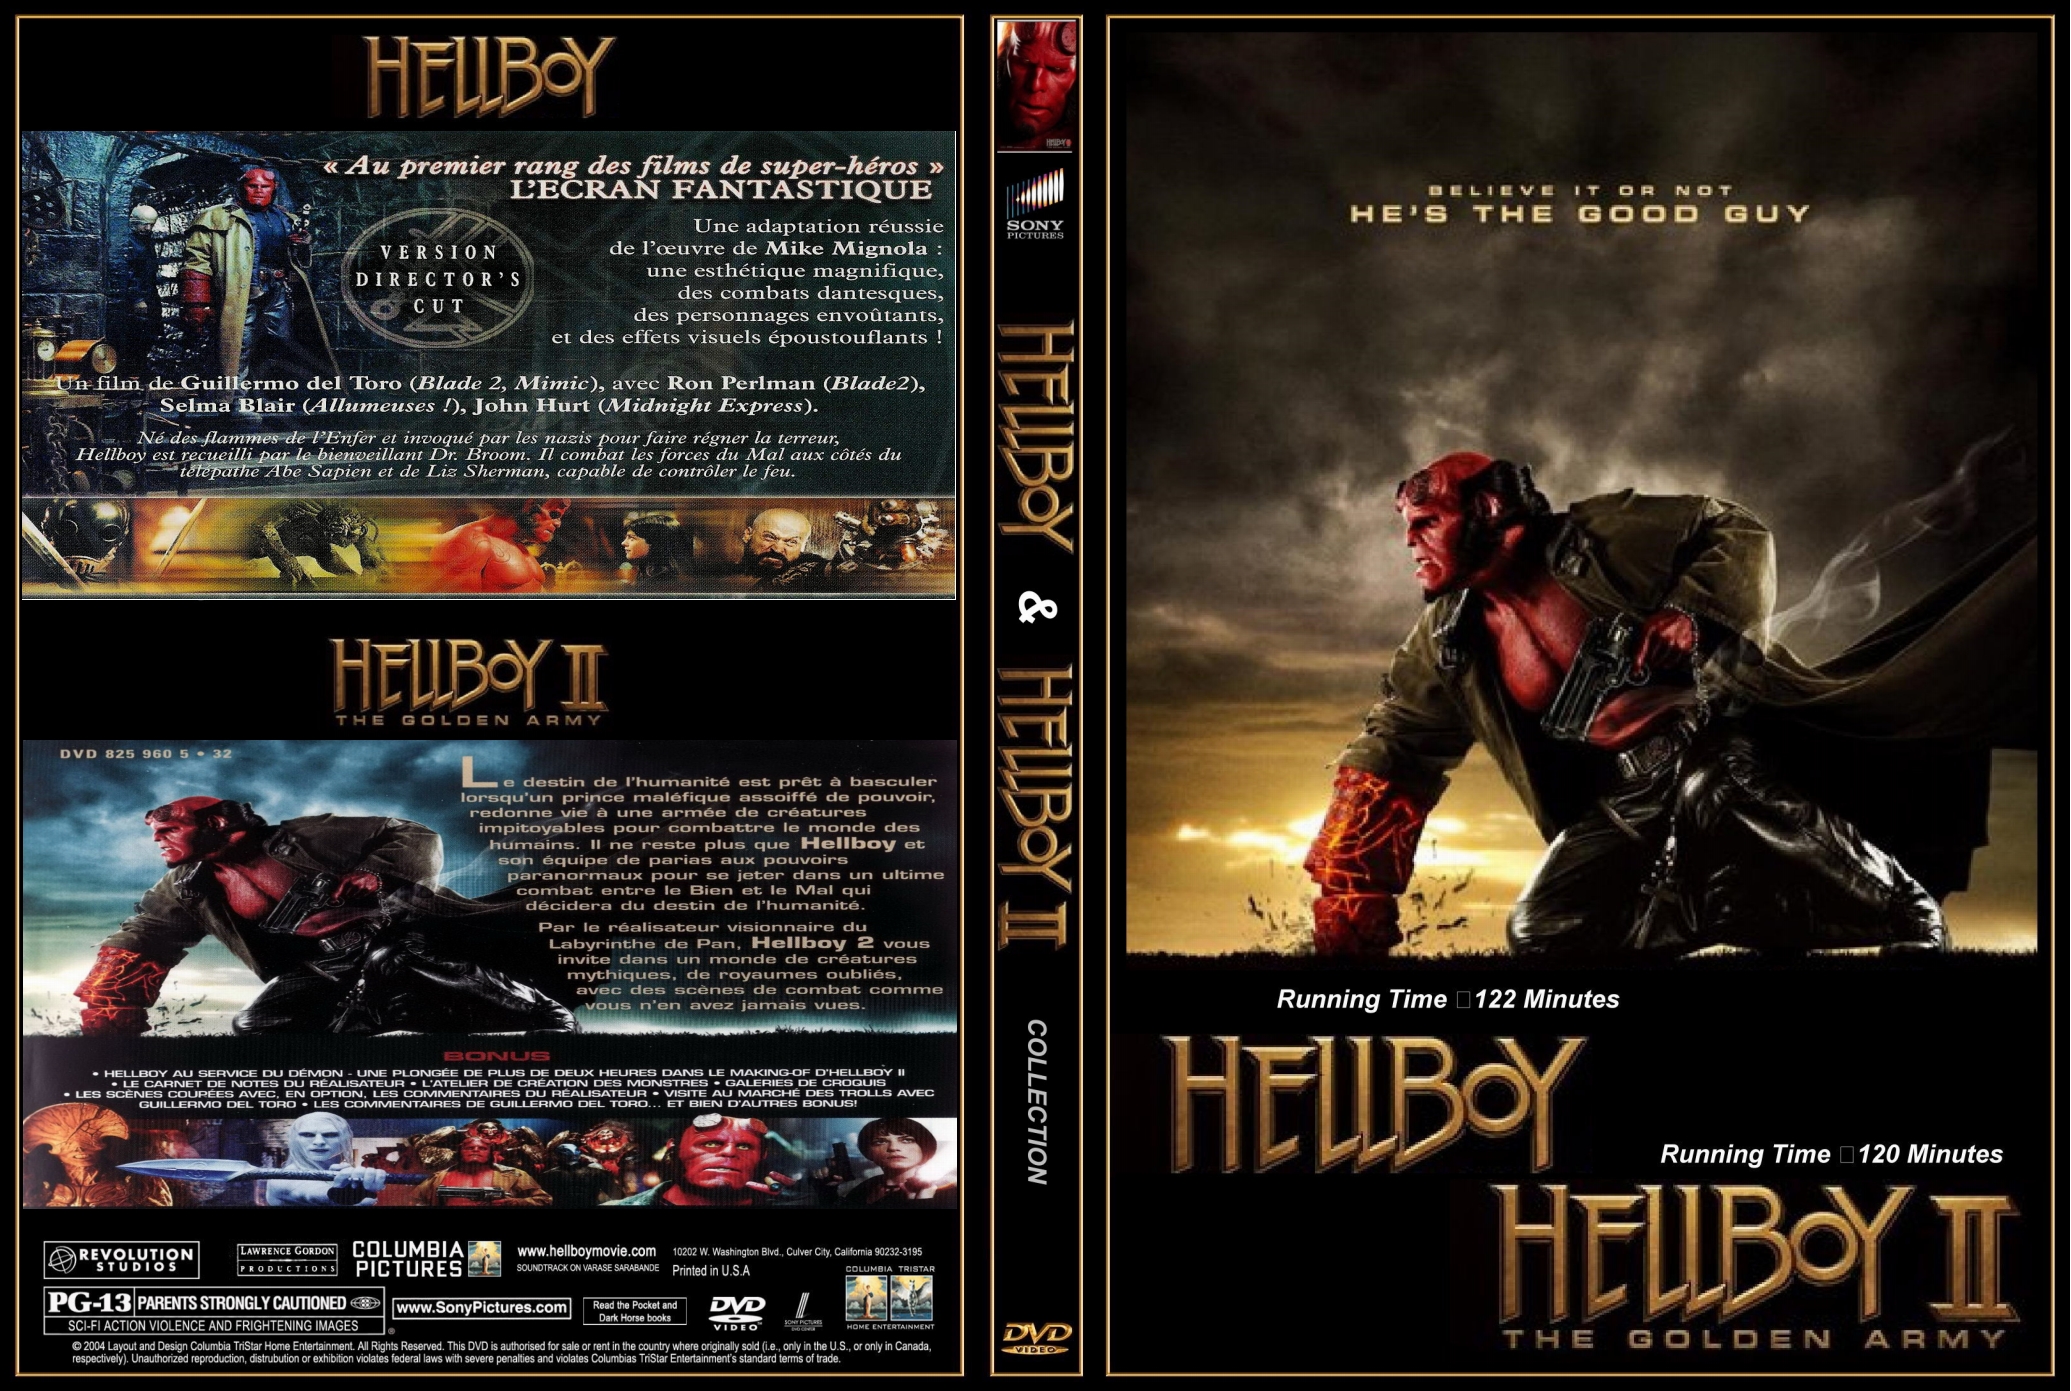 Jaquette DVD Hellboy 1 & 2 custom